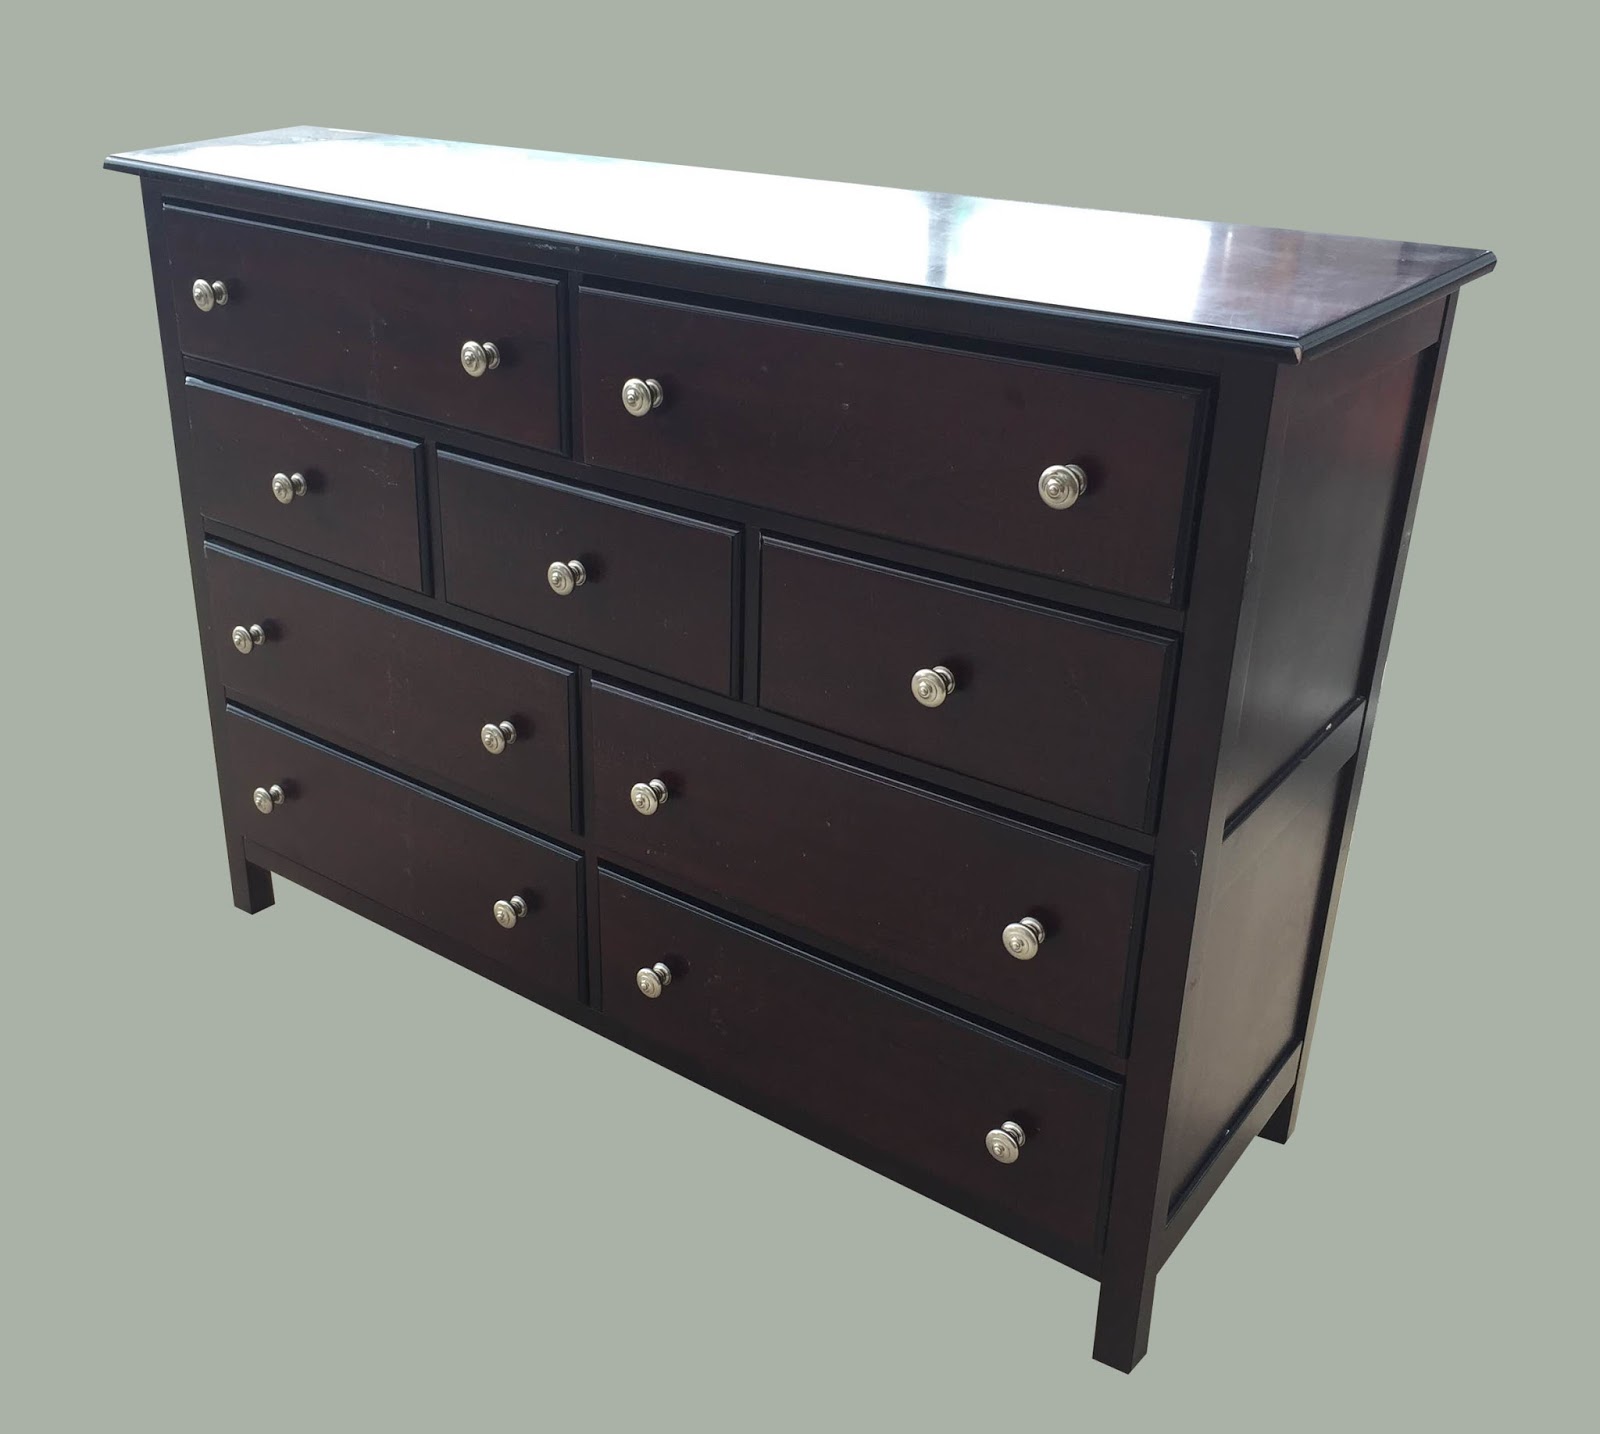 Uhuru Furniture Collectibles 9 Drawer Dresser With Silver Knobs